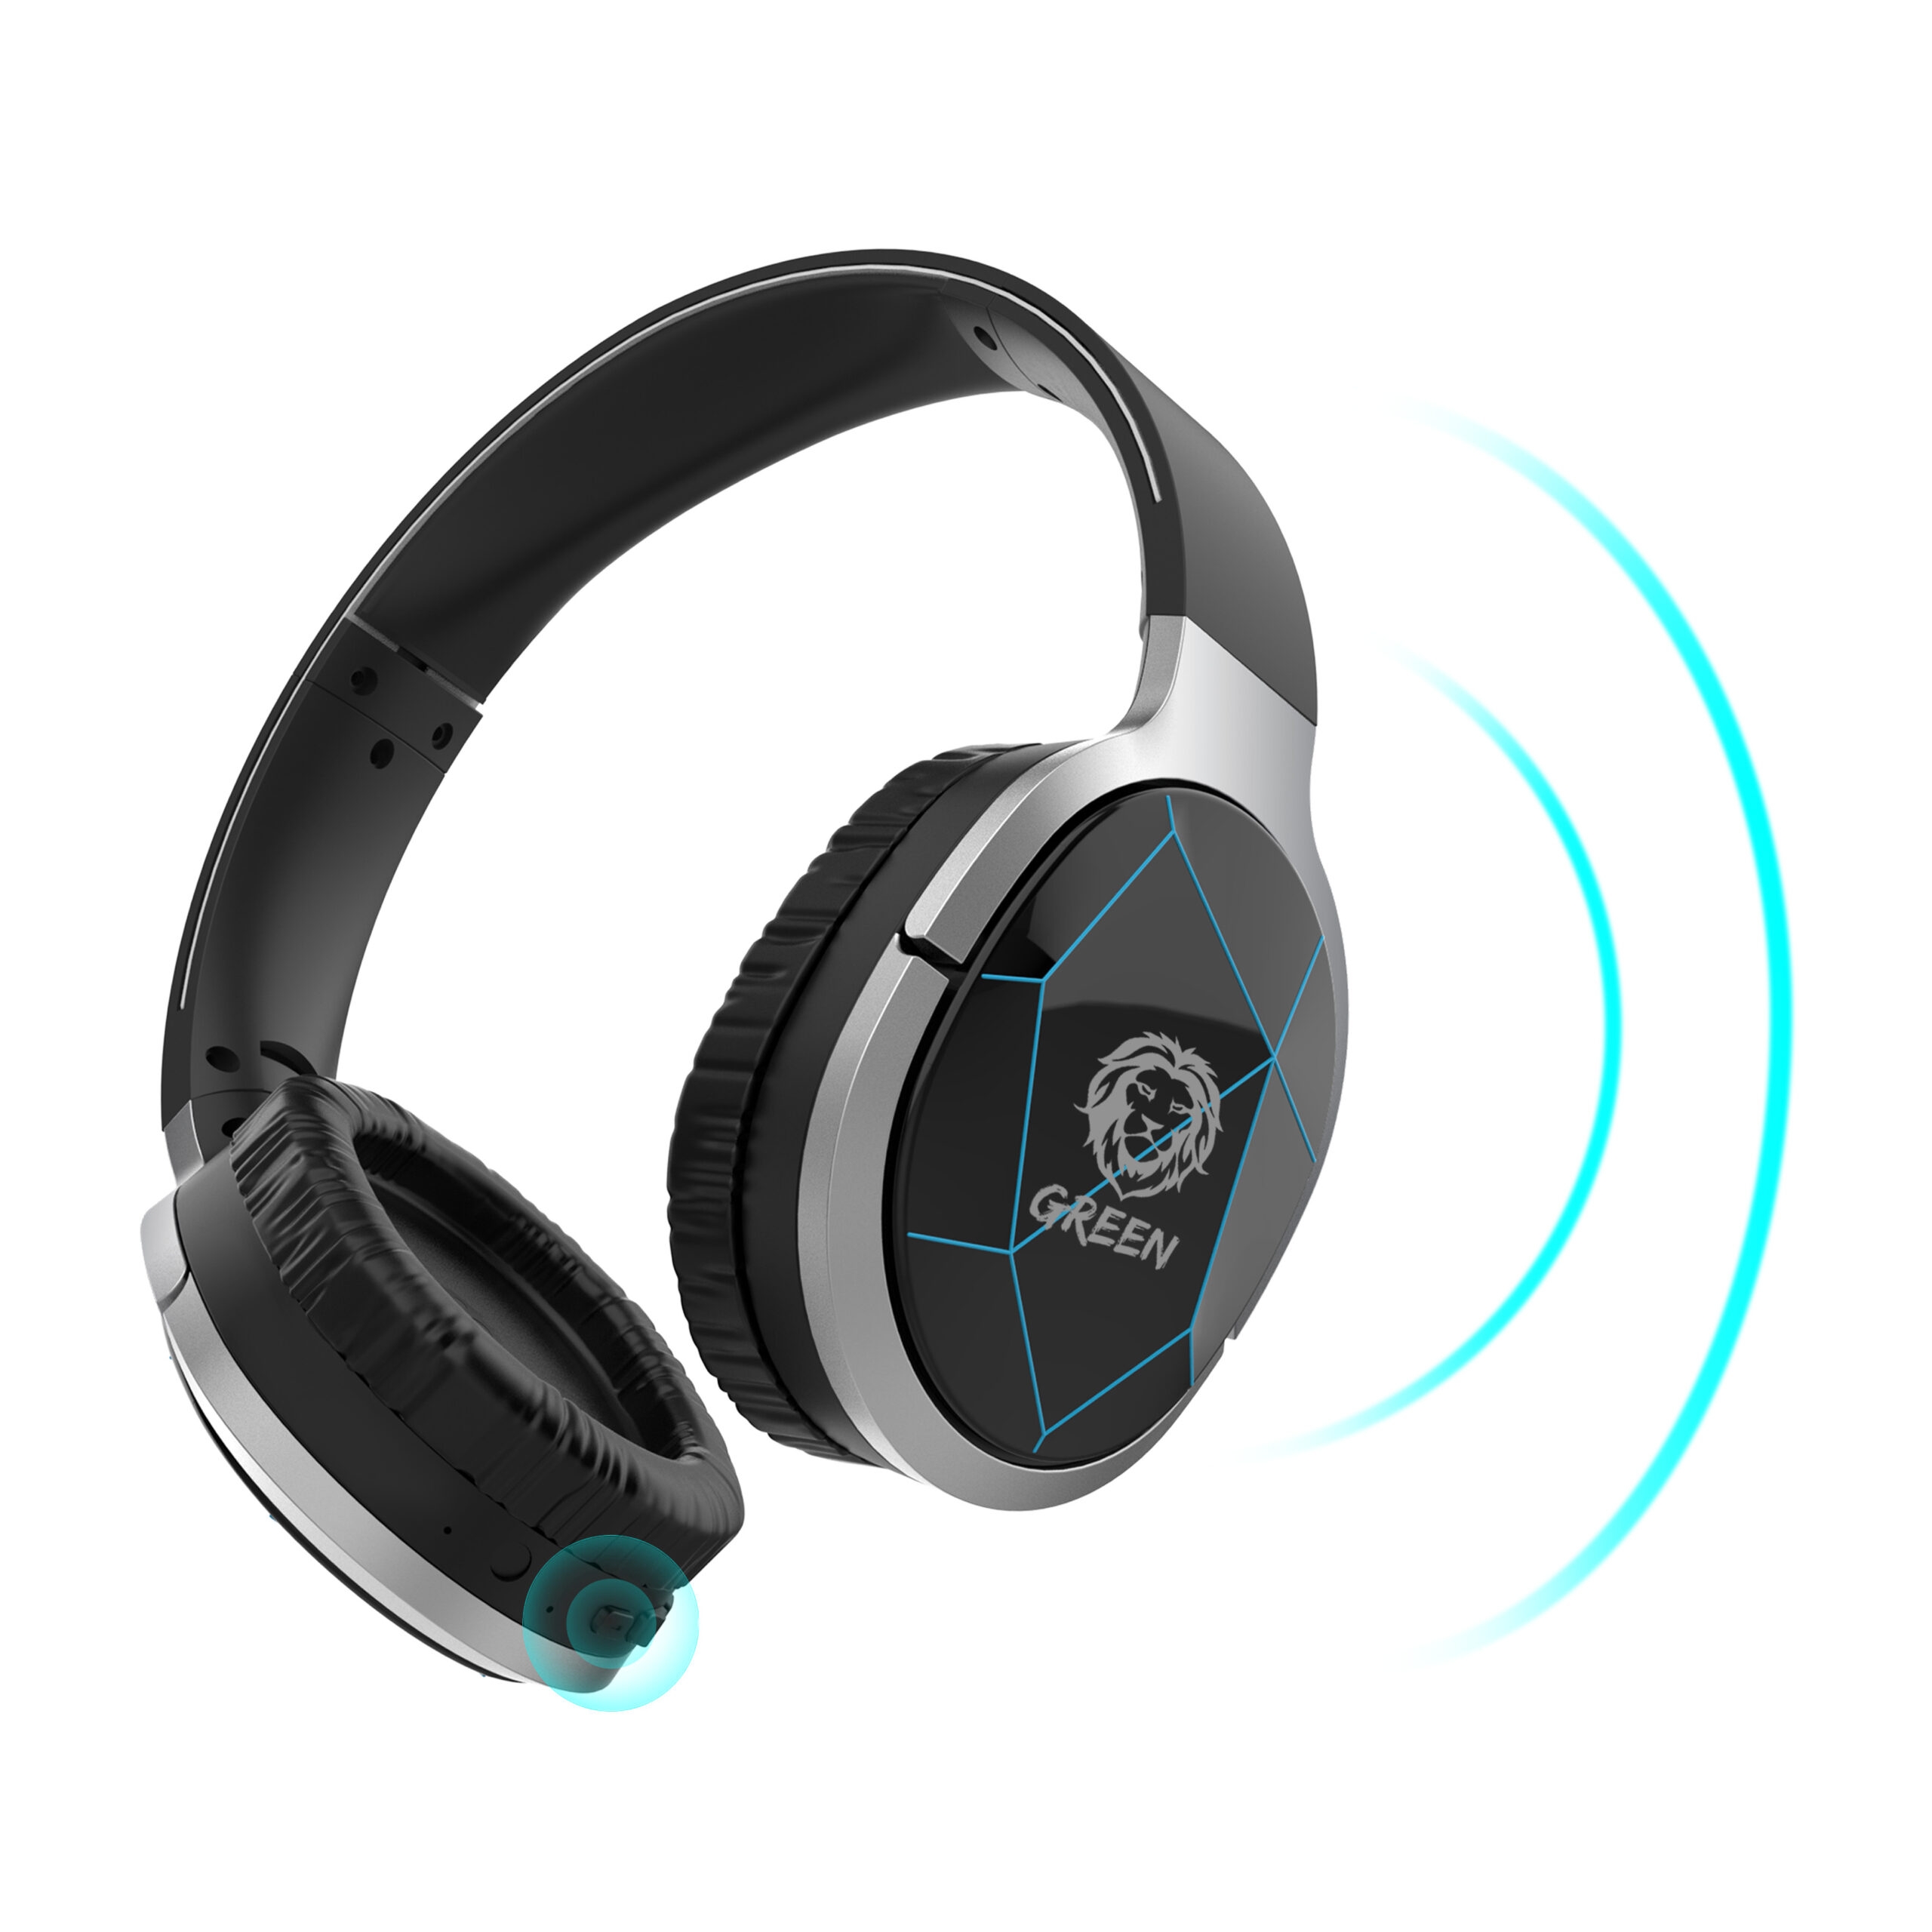 سماعات رأس لاسلكية ( مع ميكروفون ) - أسود Green -  Lisbon Series Wireless On-Ear Headphones with Mic